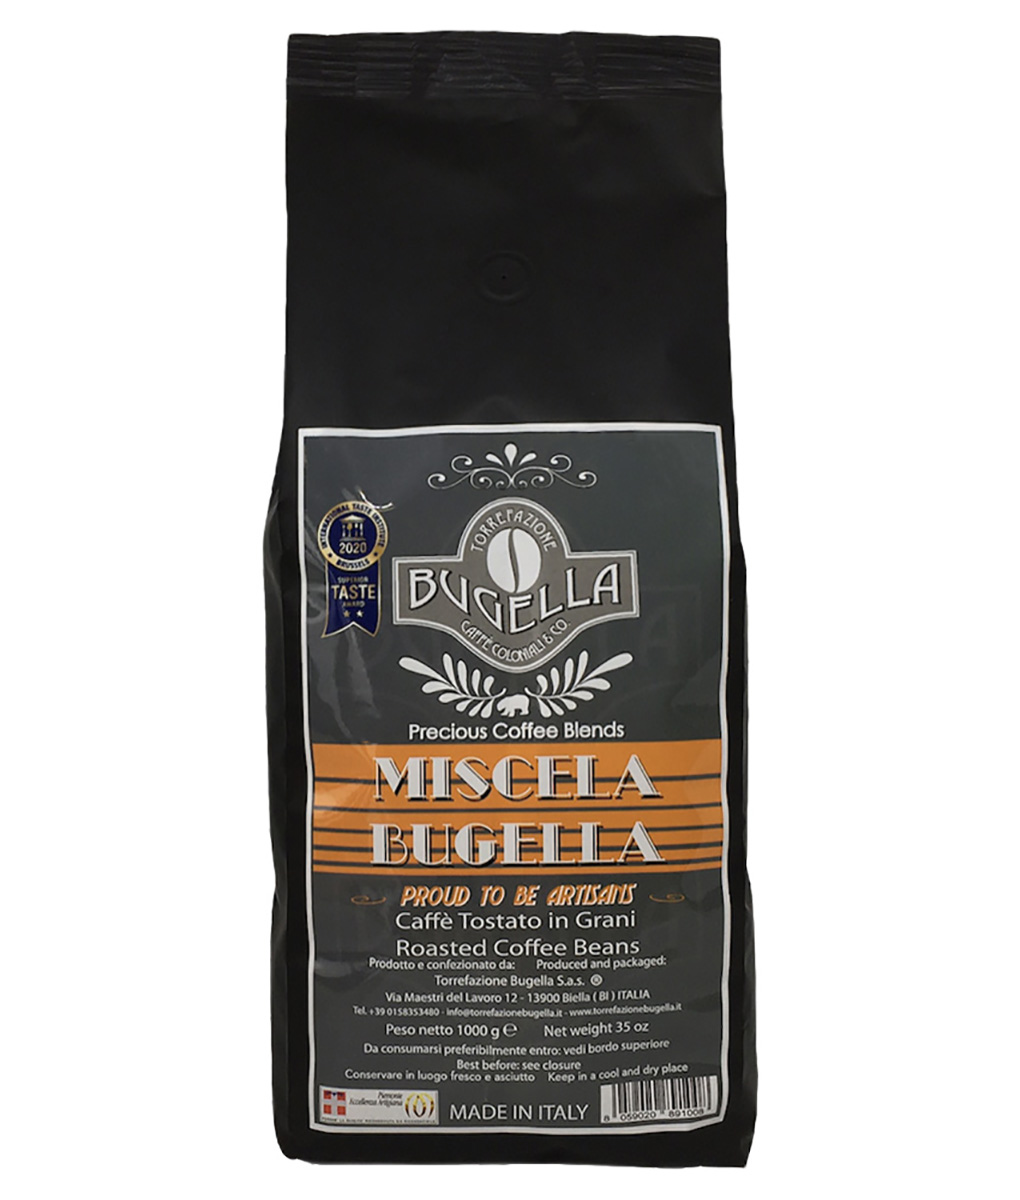 Miscela Bugella roasted coffee beans